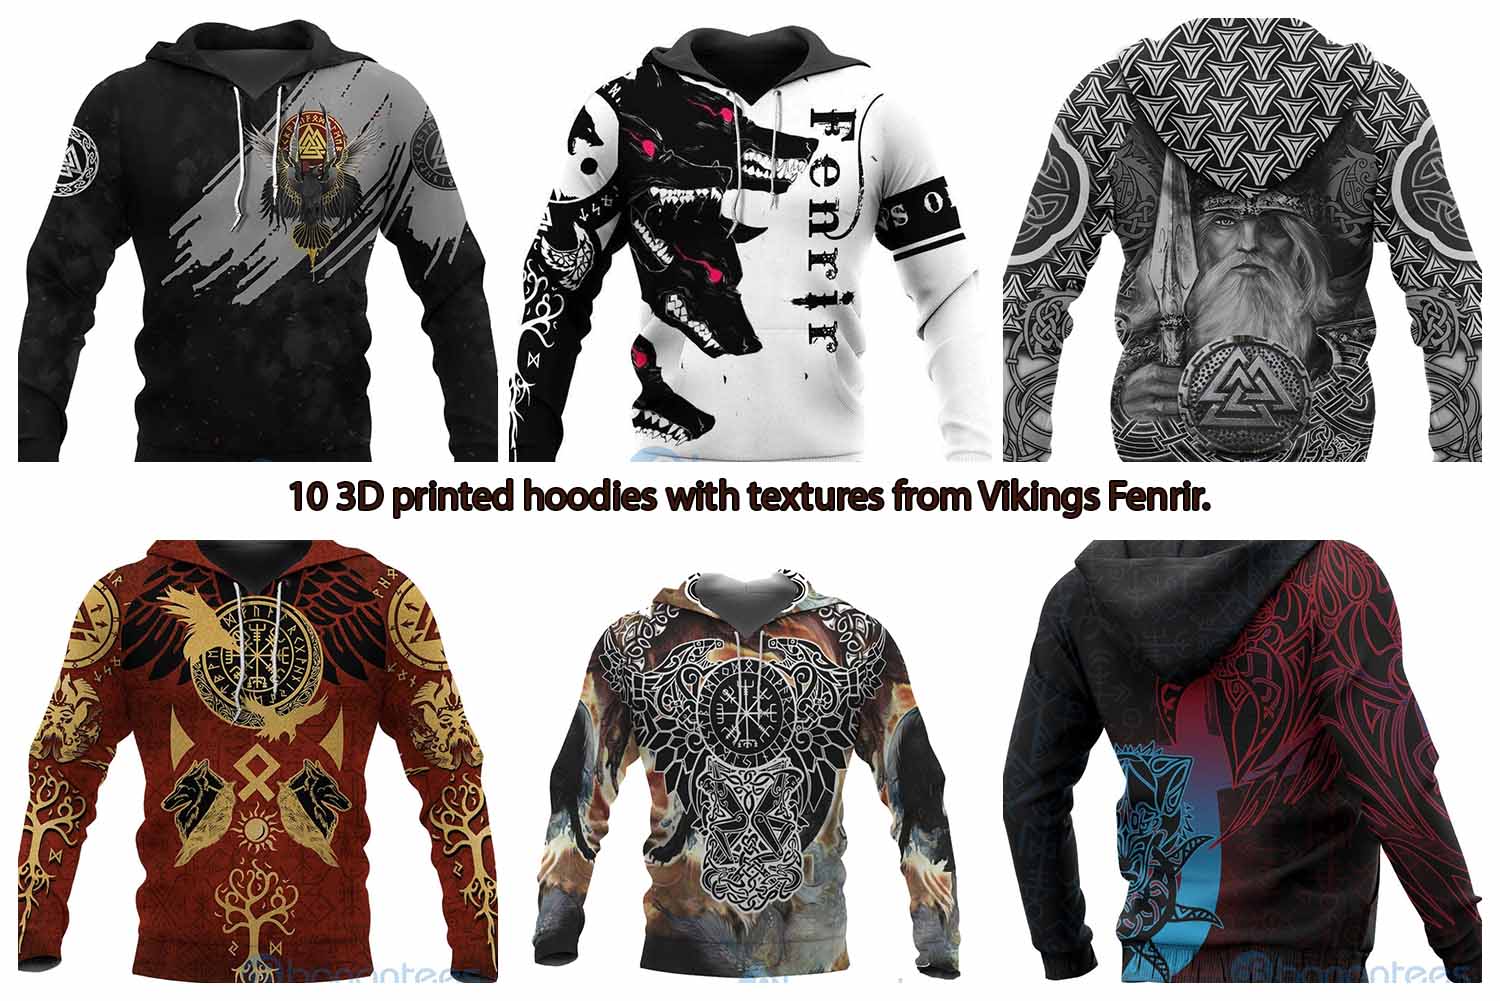 10 3D printed hoodies with textures from Vikings Fenrir